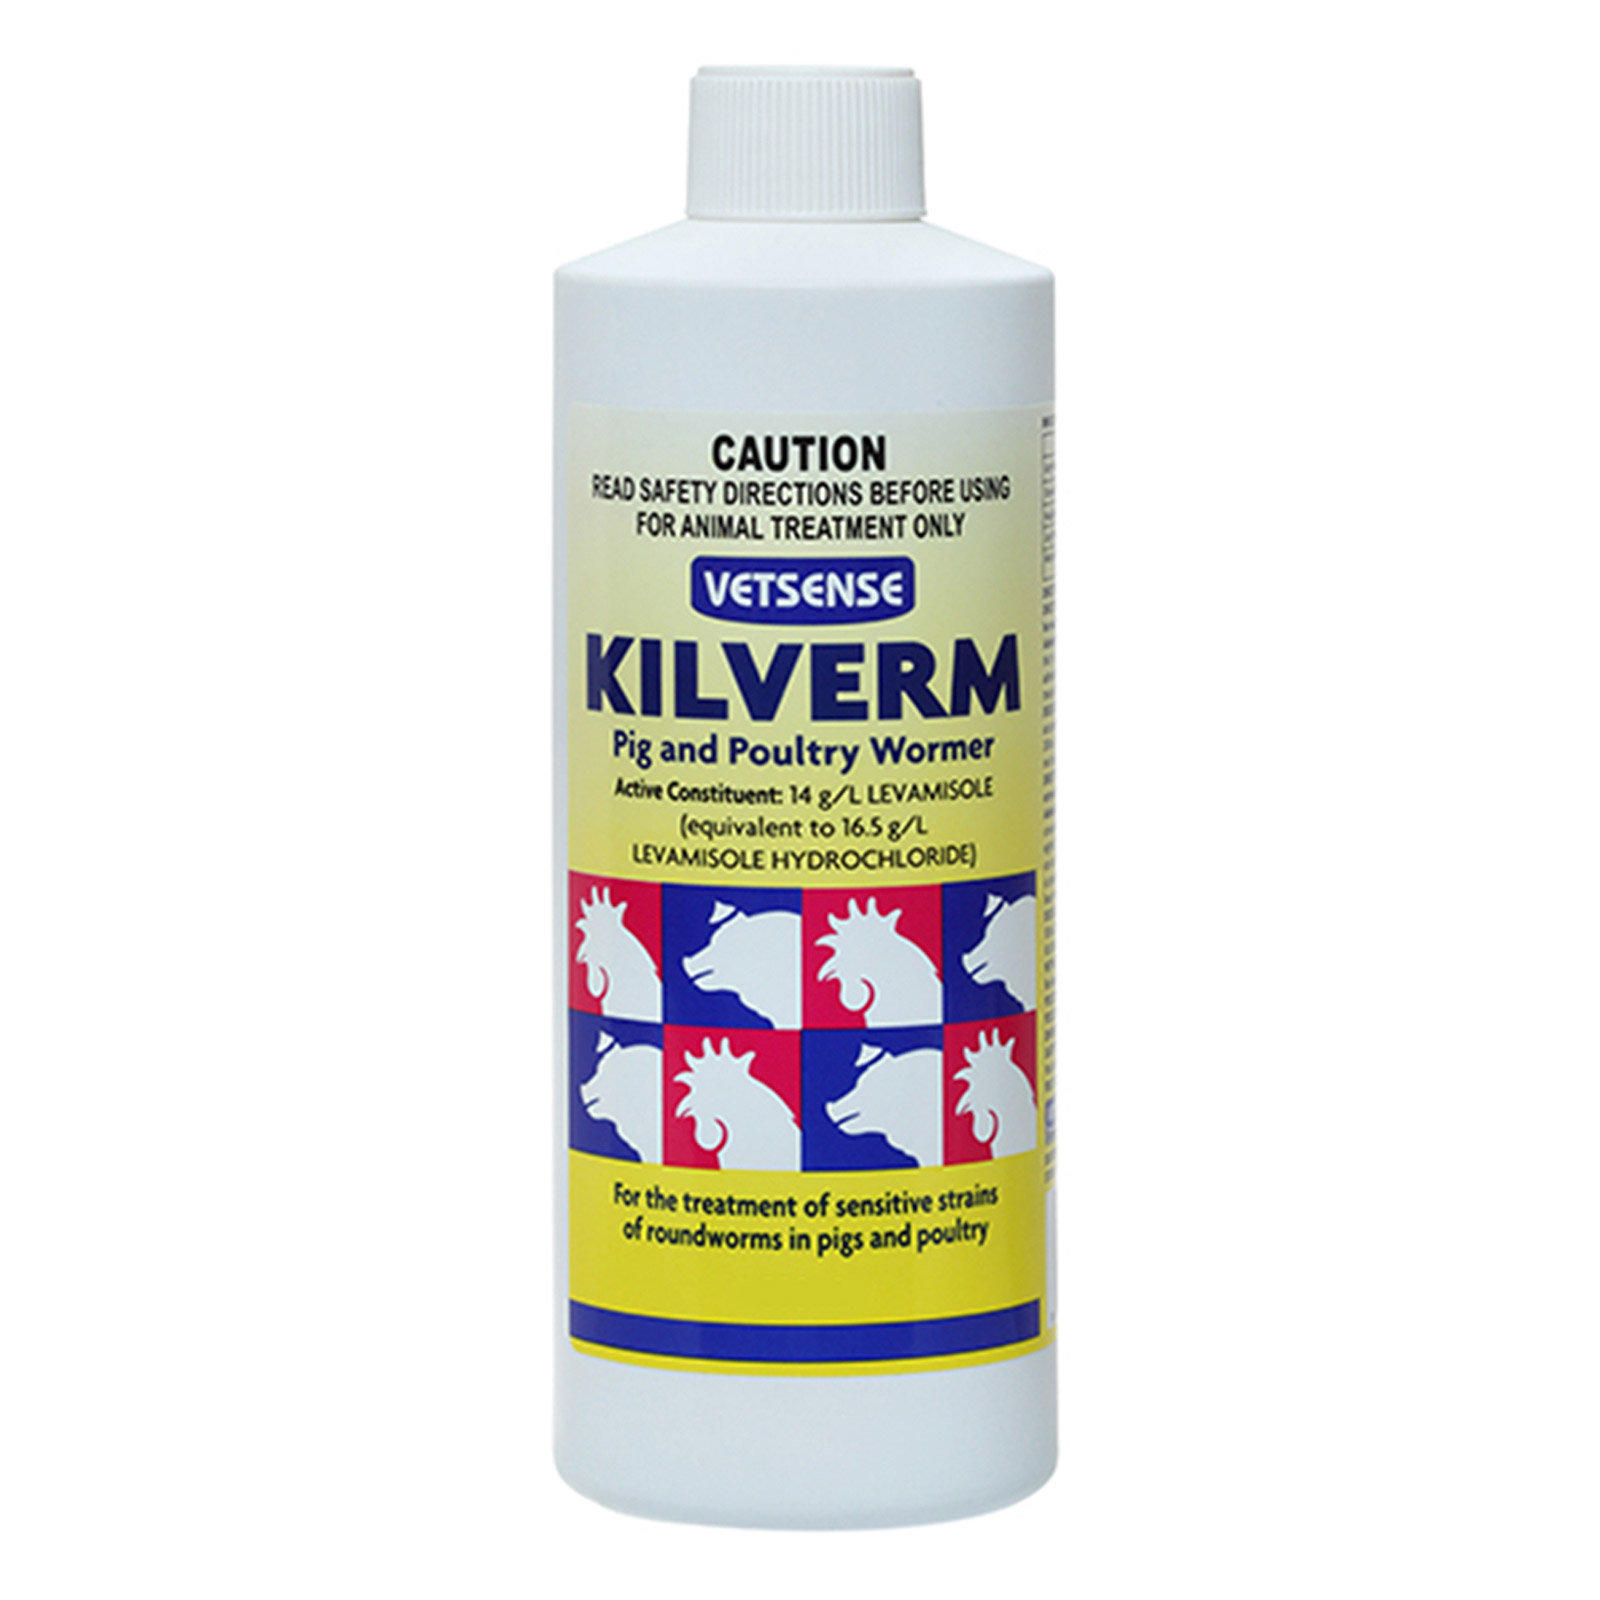 Kilverm Pig & Poultry for Farm Animals